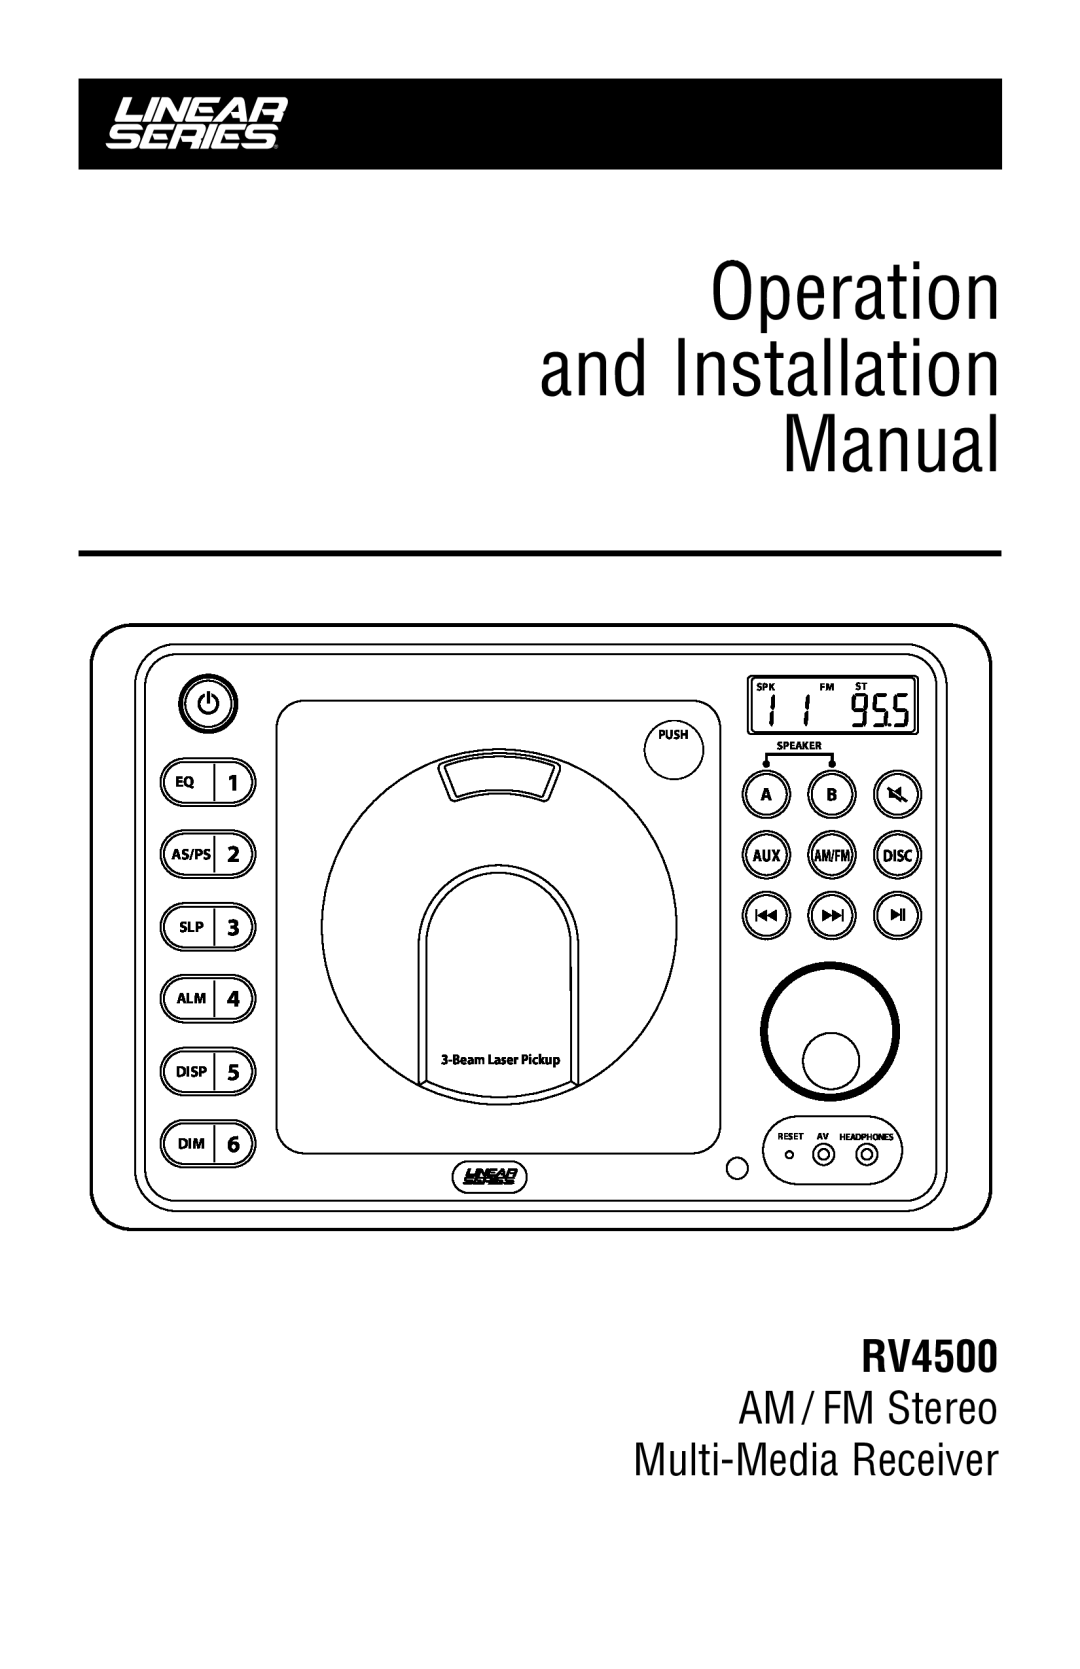 Linear RV4500 installation manual Operation and Installation Manual, AM / FM Stereo Multi-MediaReceiver, 1 2, Push, Reset 